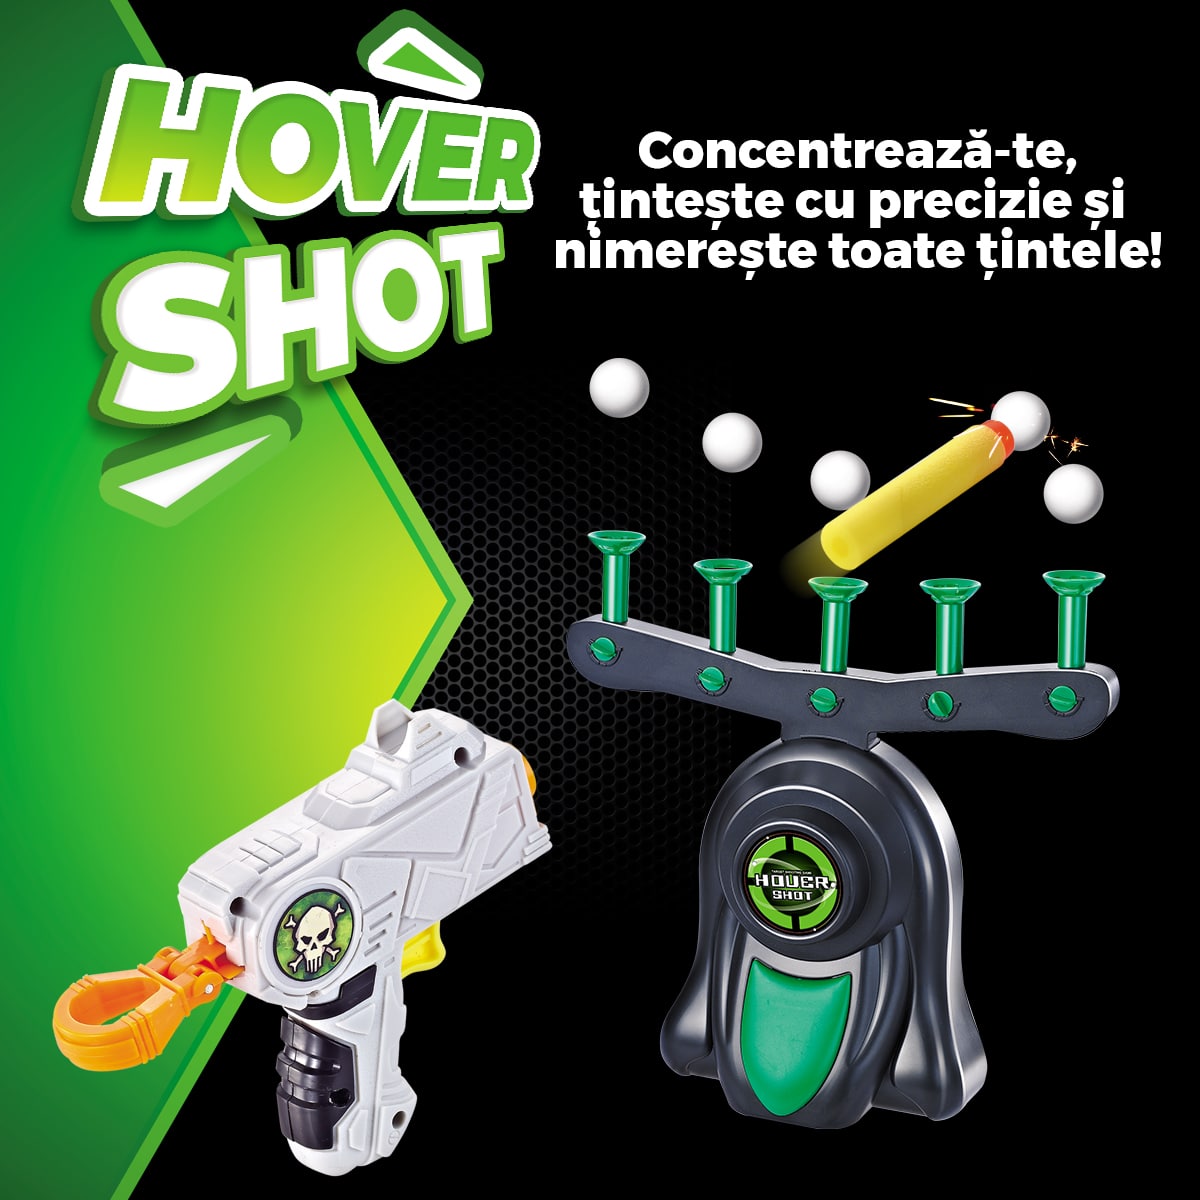 Shooting game - Hover Shot